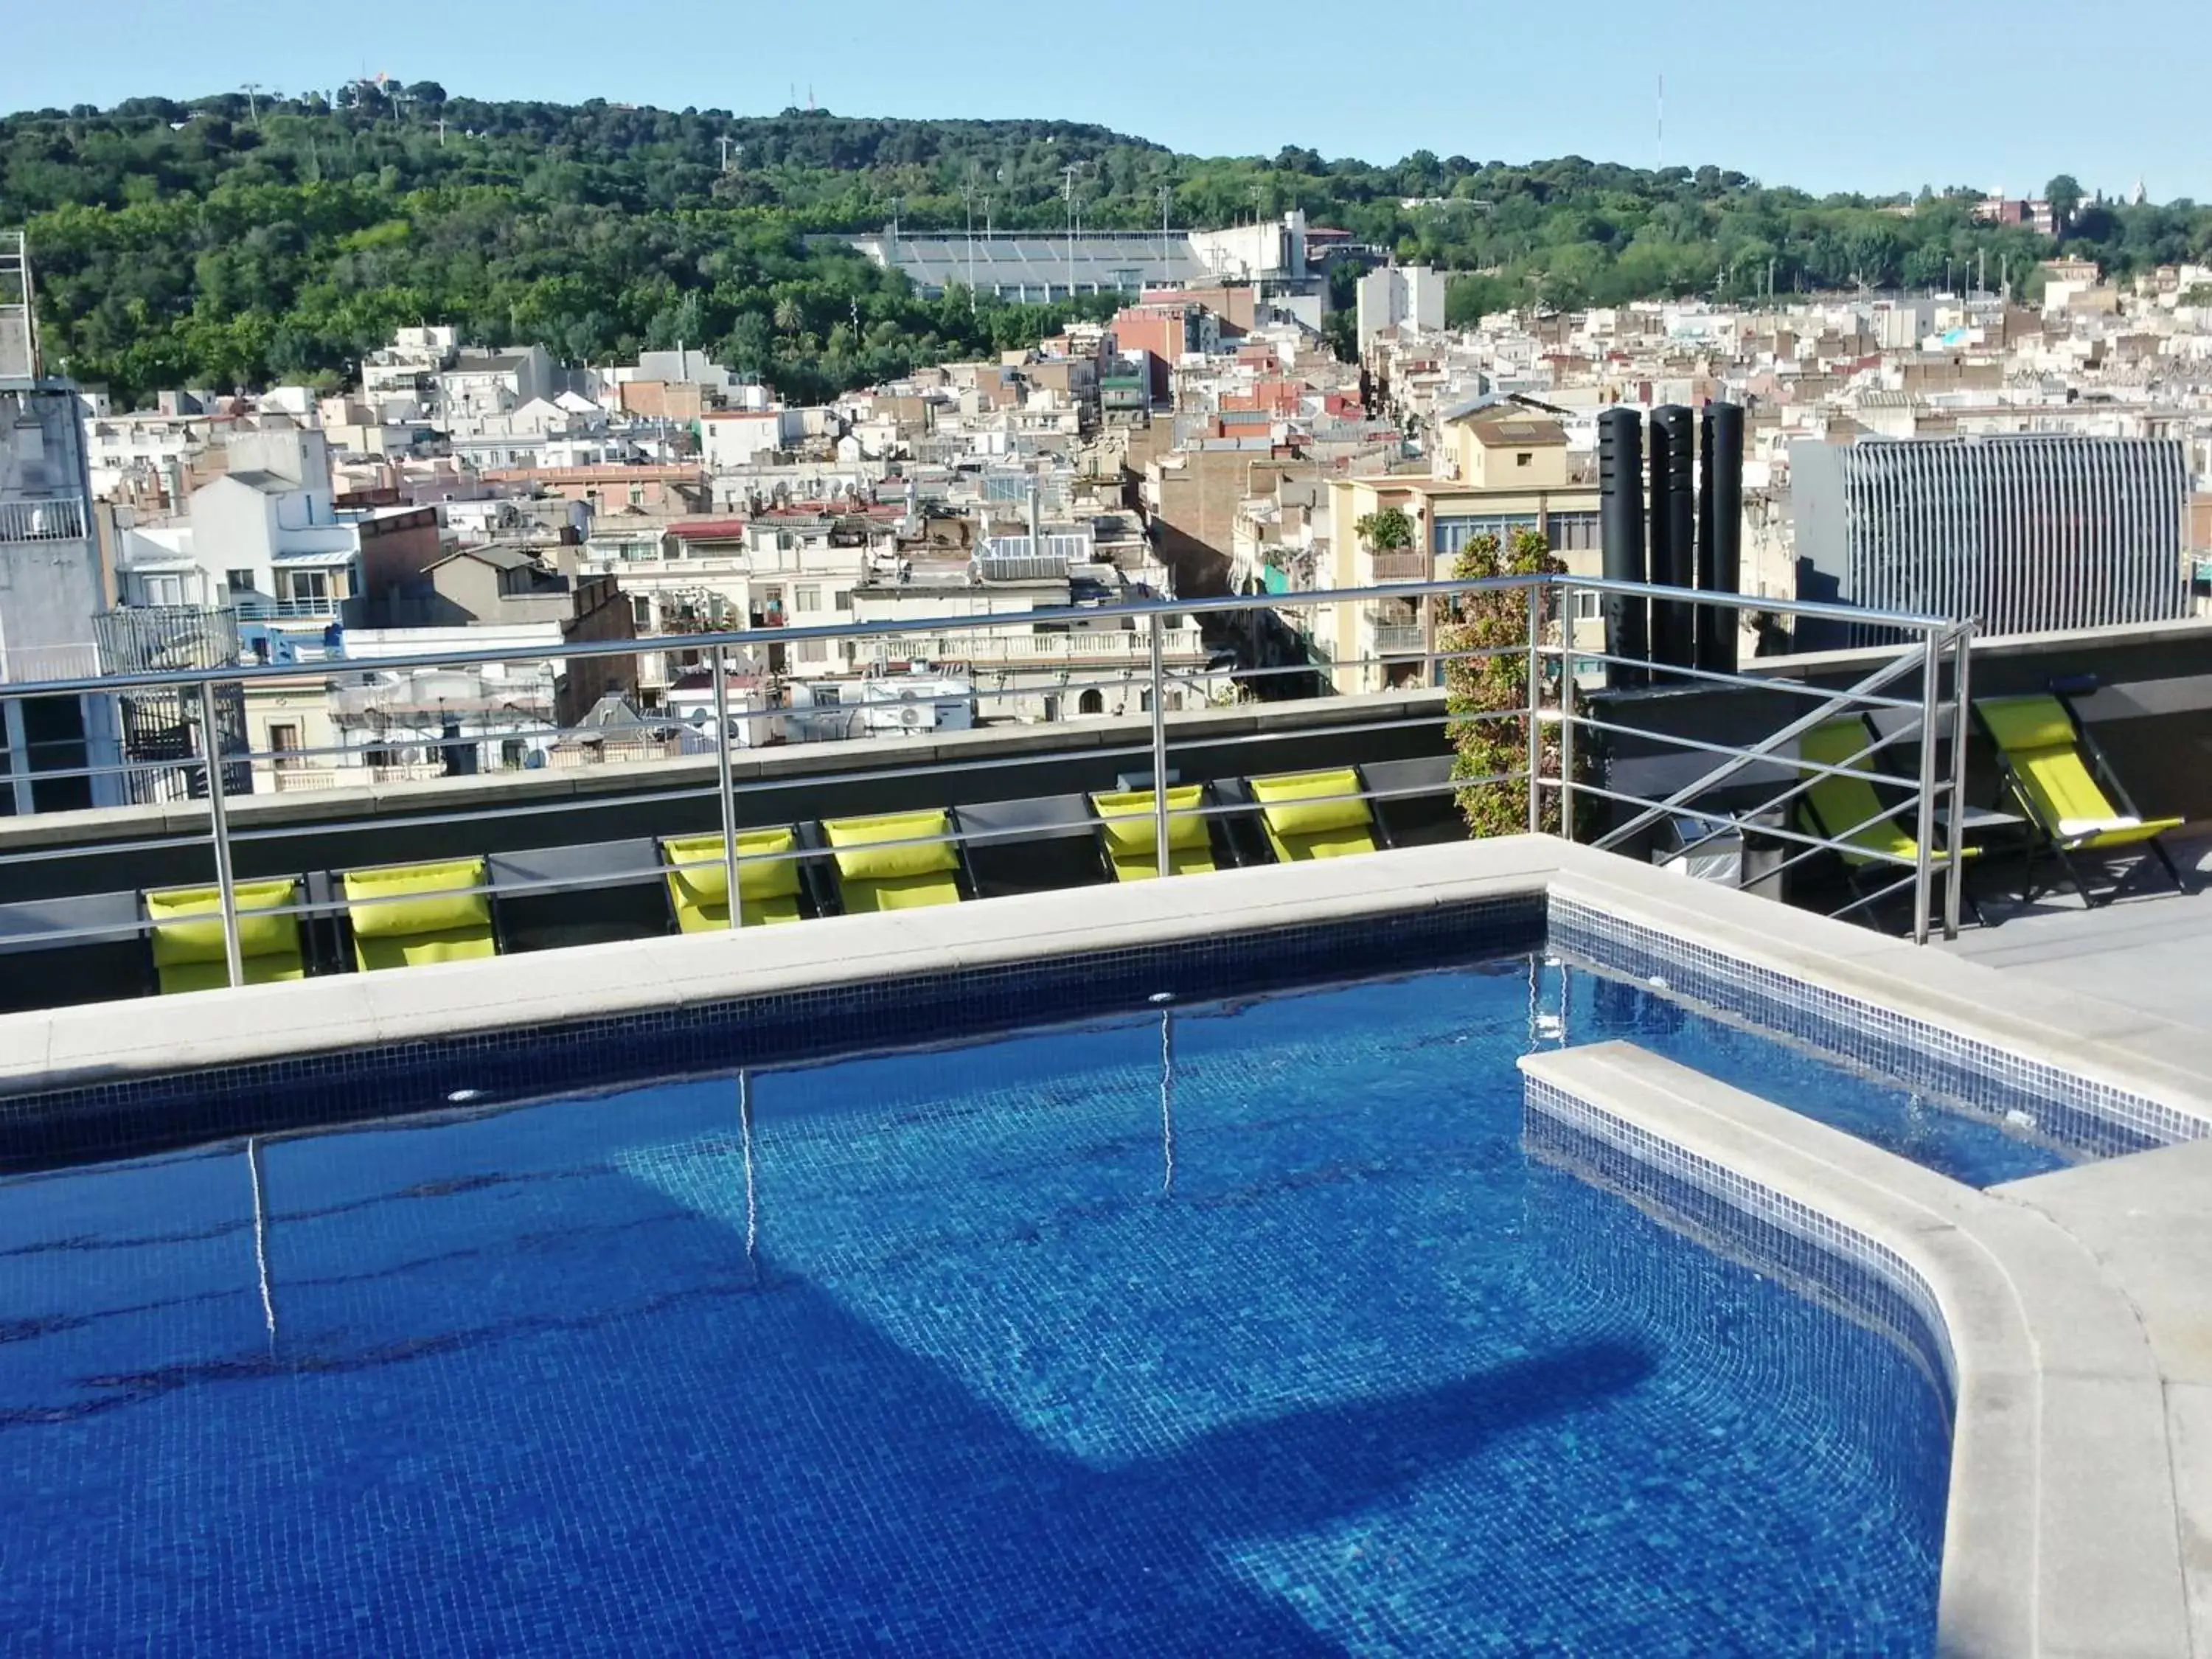 Swimming Pool in Hotel Barcelona Universal